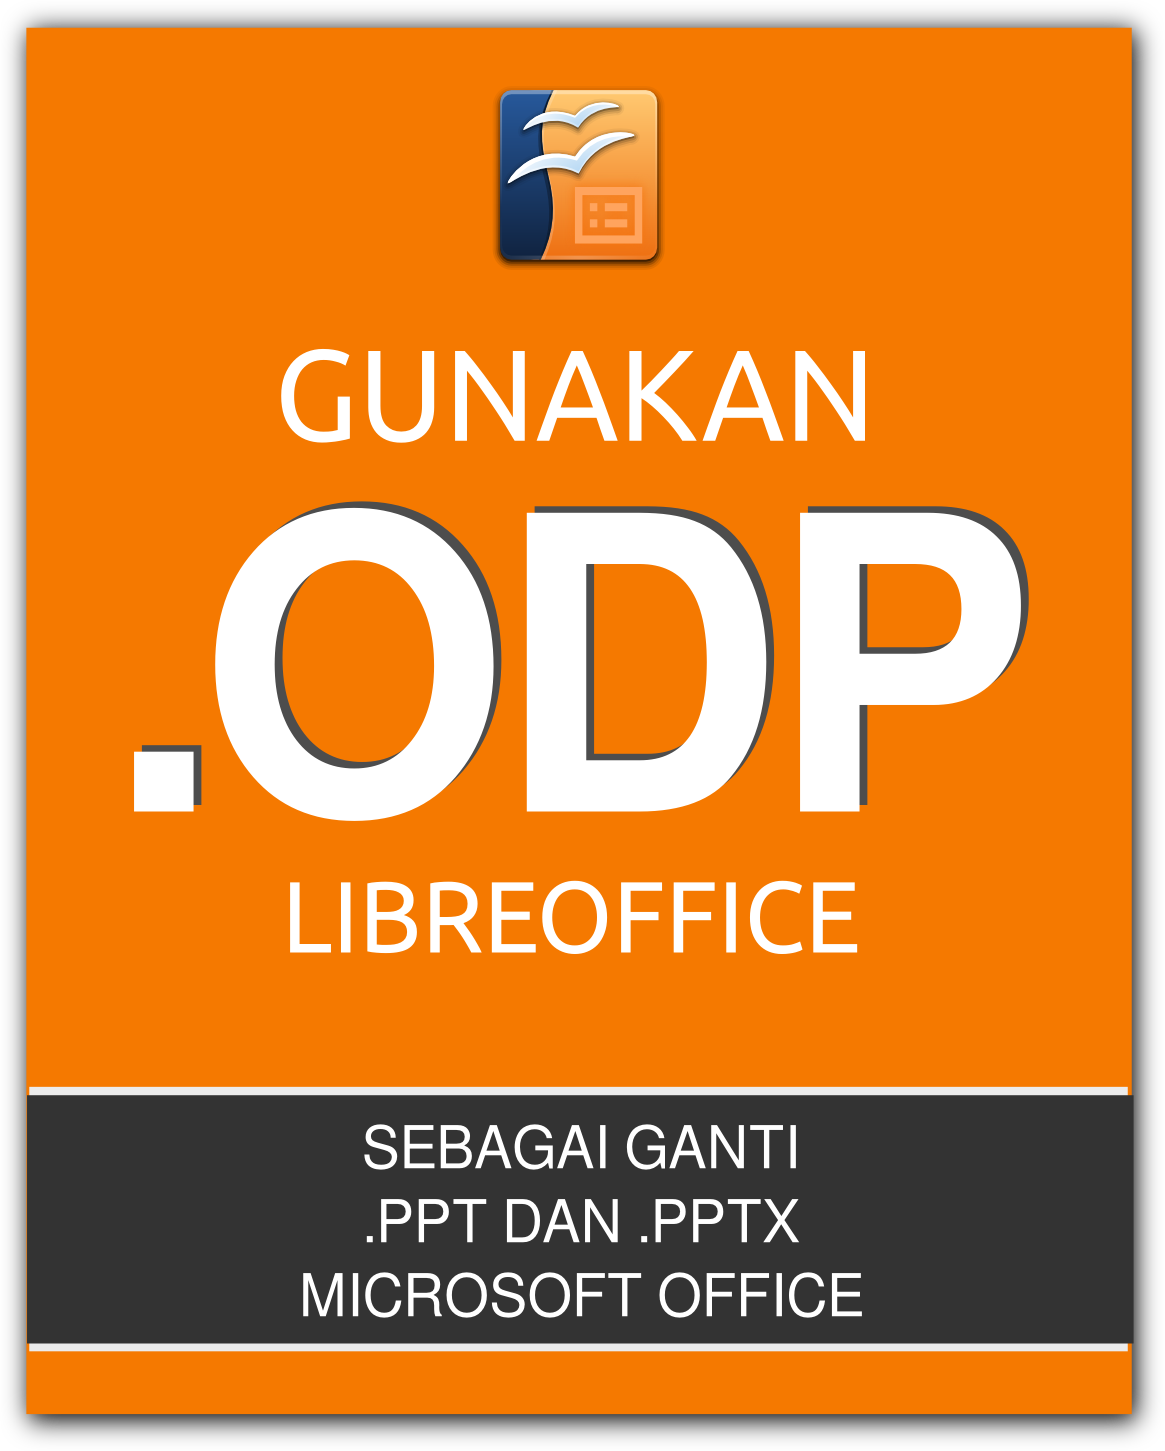 LibreOffice Impress